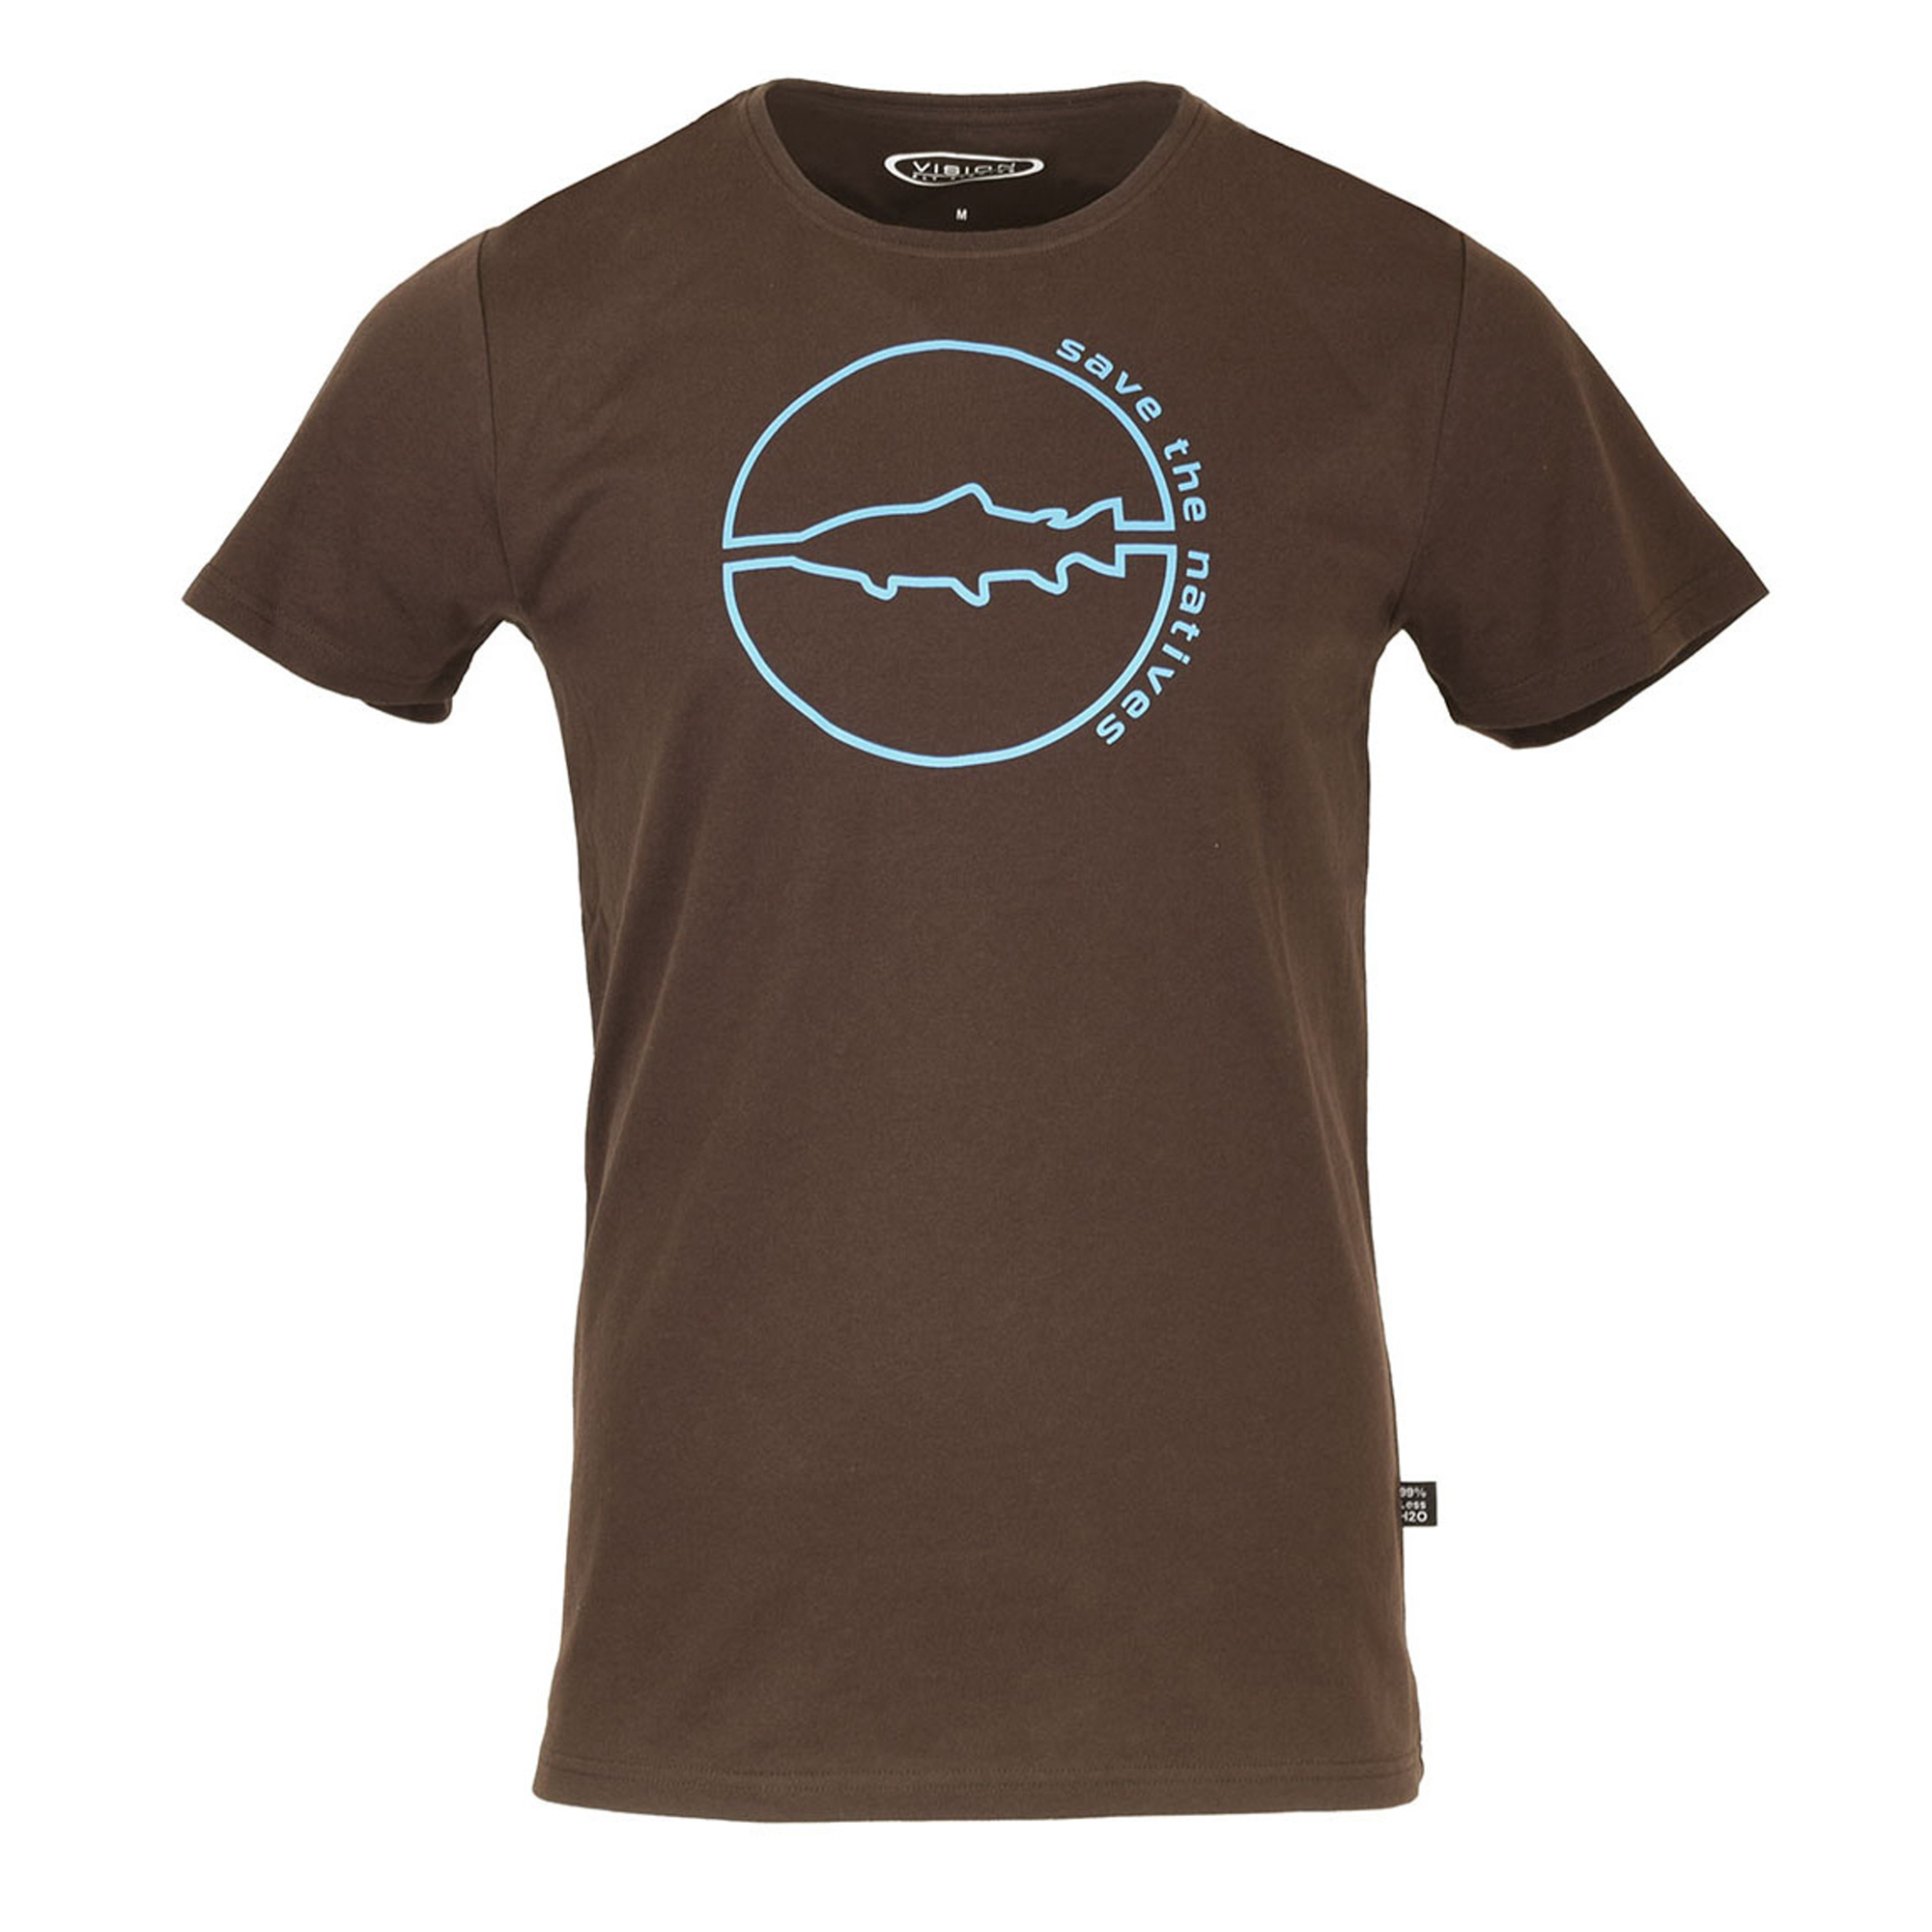 Vision Save T-Shirt – Guide Flyfishing, Fly Fishing Rods, Reels, Sage, Redington, RIO